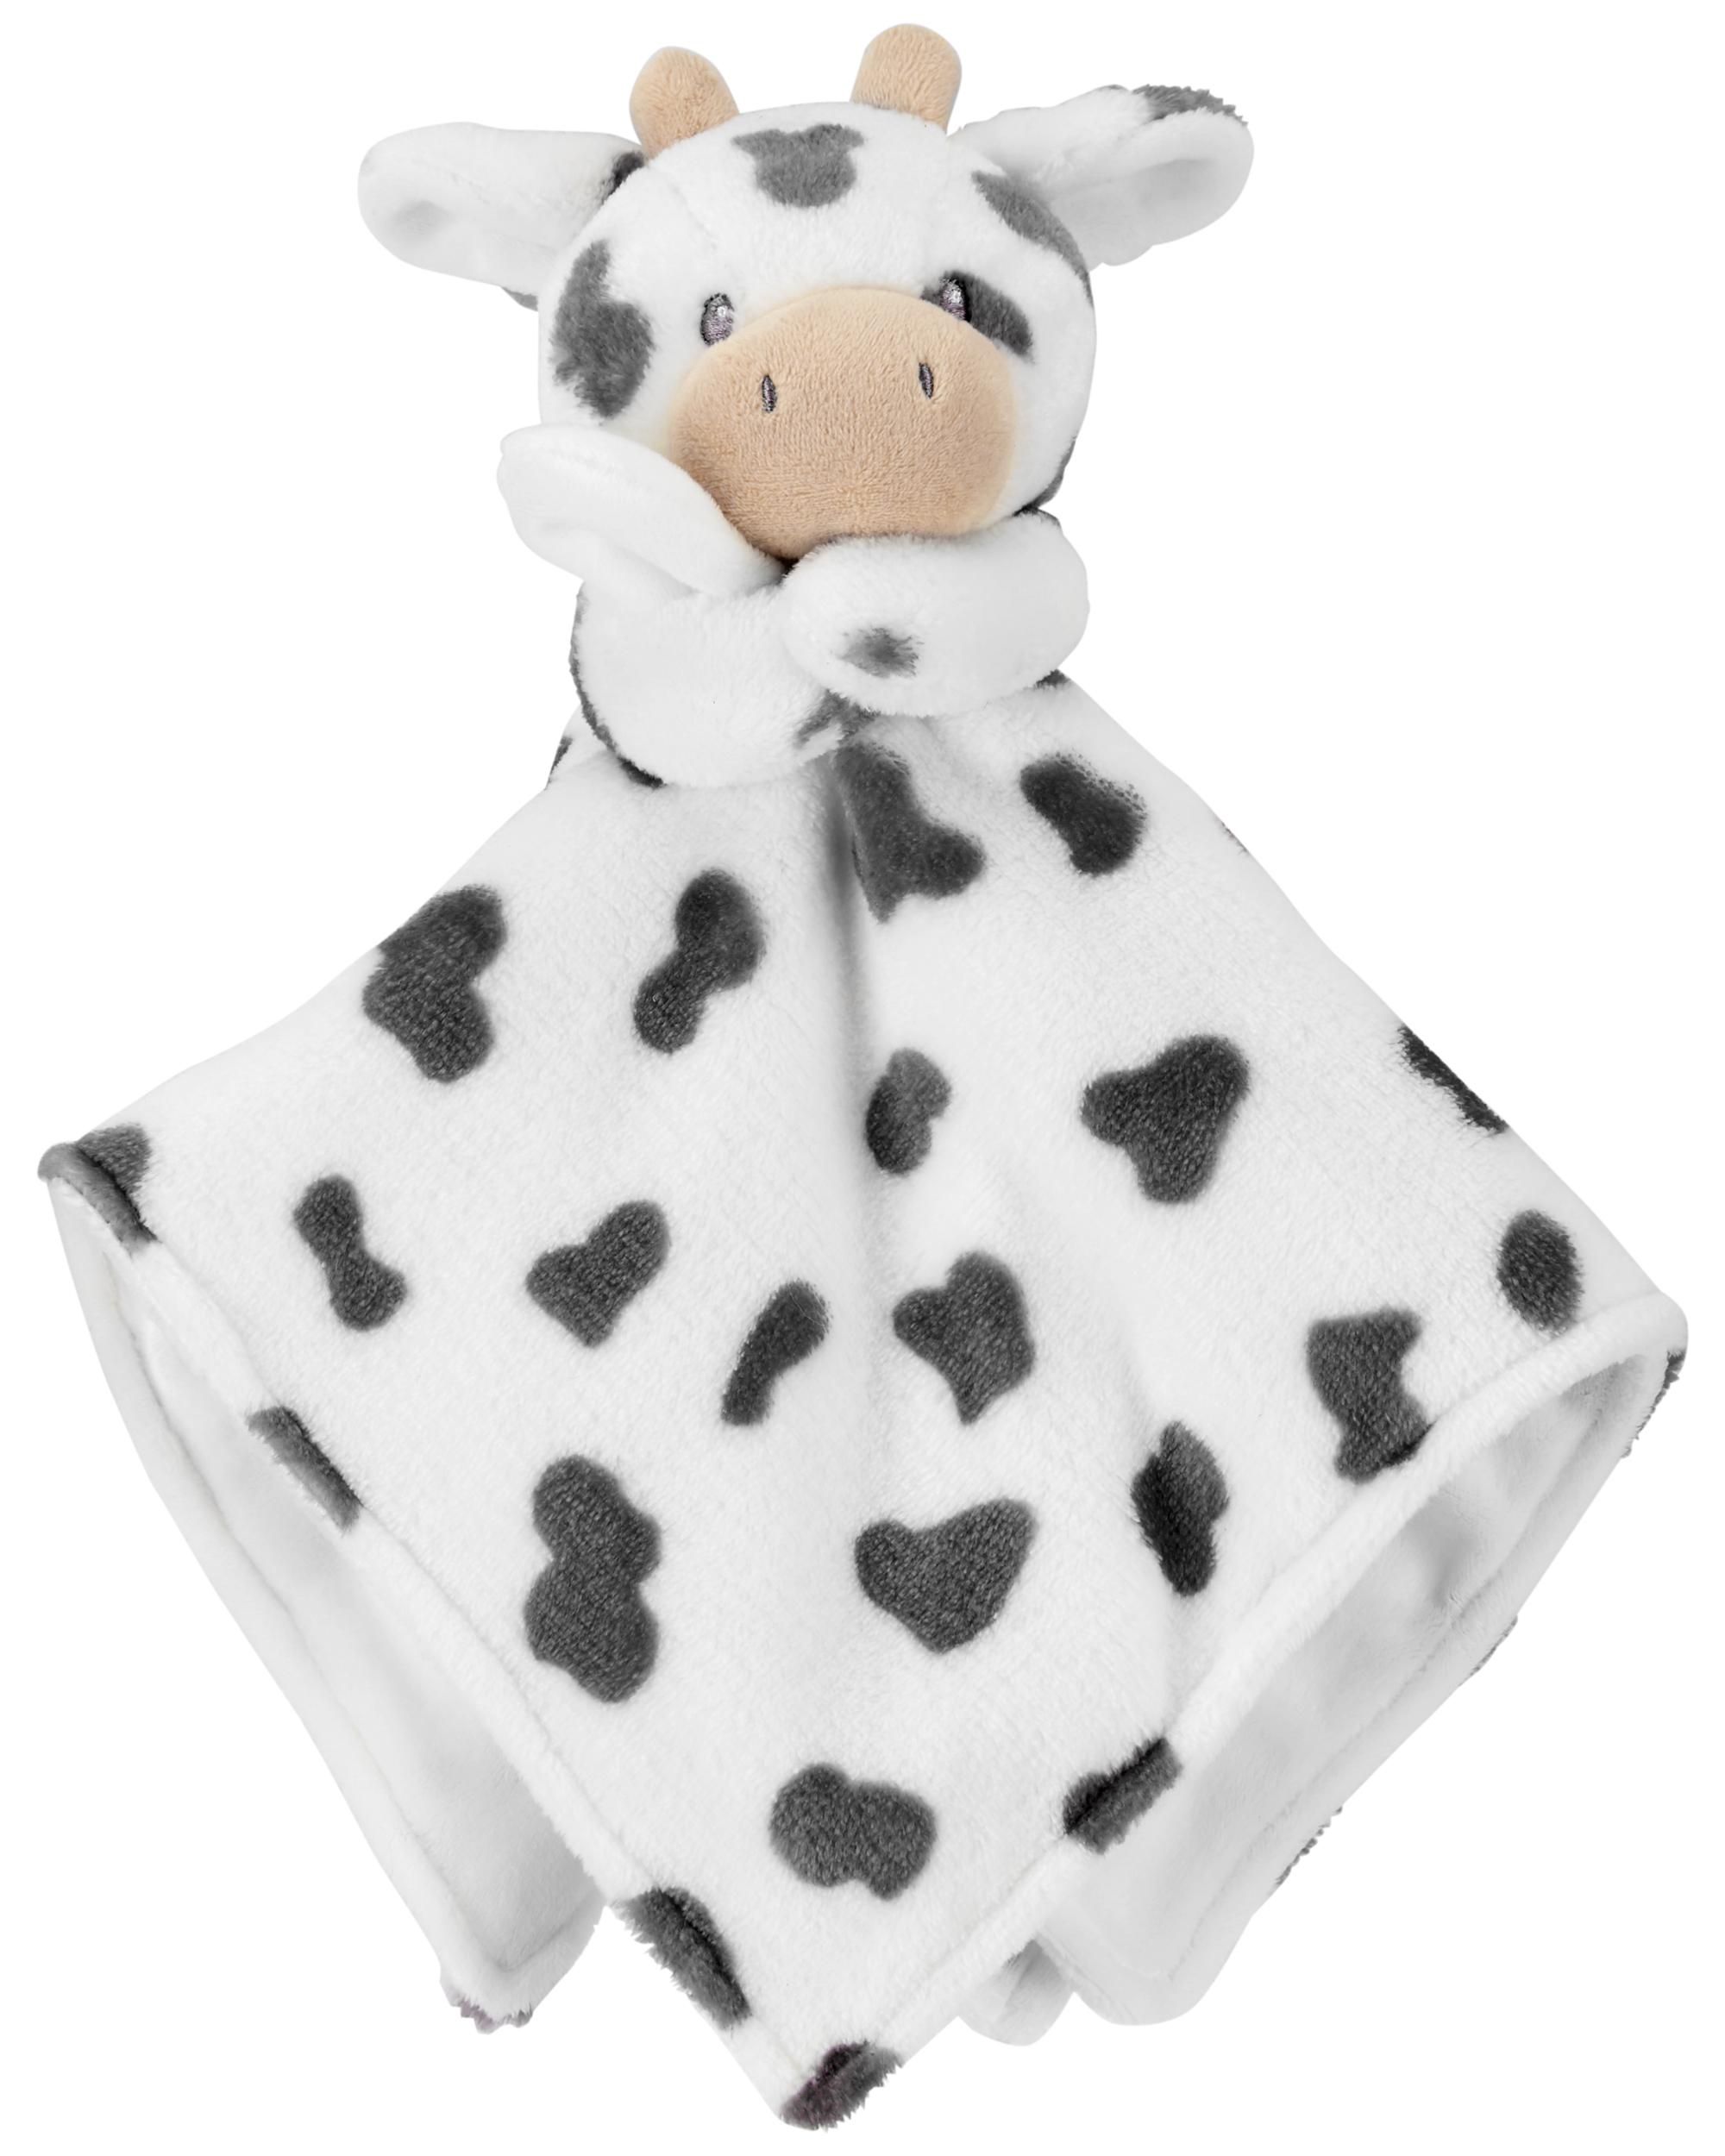 Oshkoshbgosh Cow Security Blanket